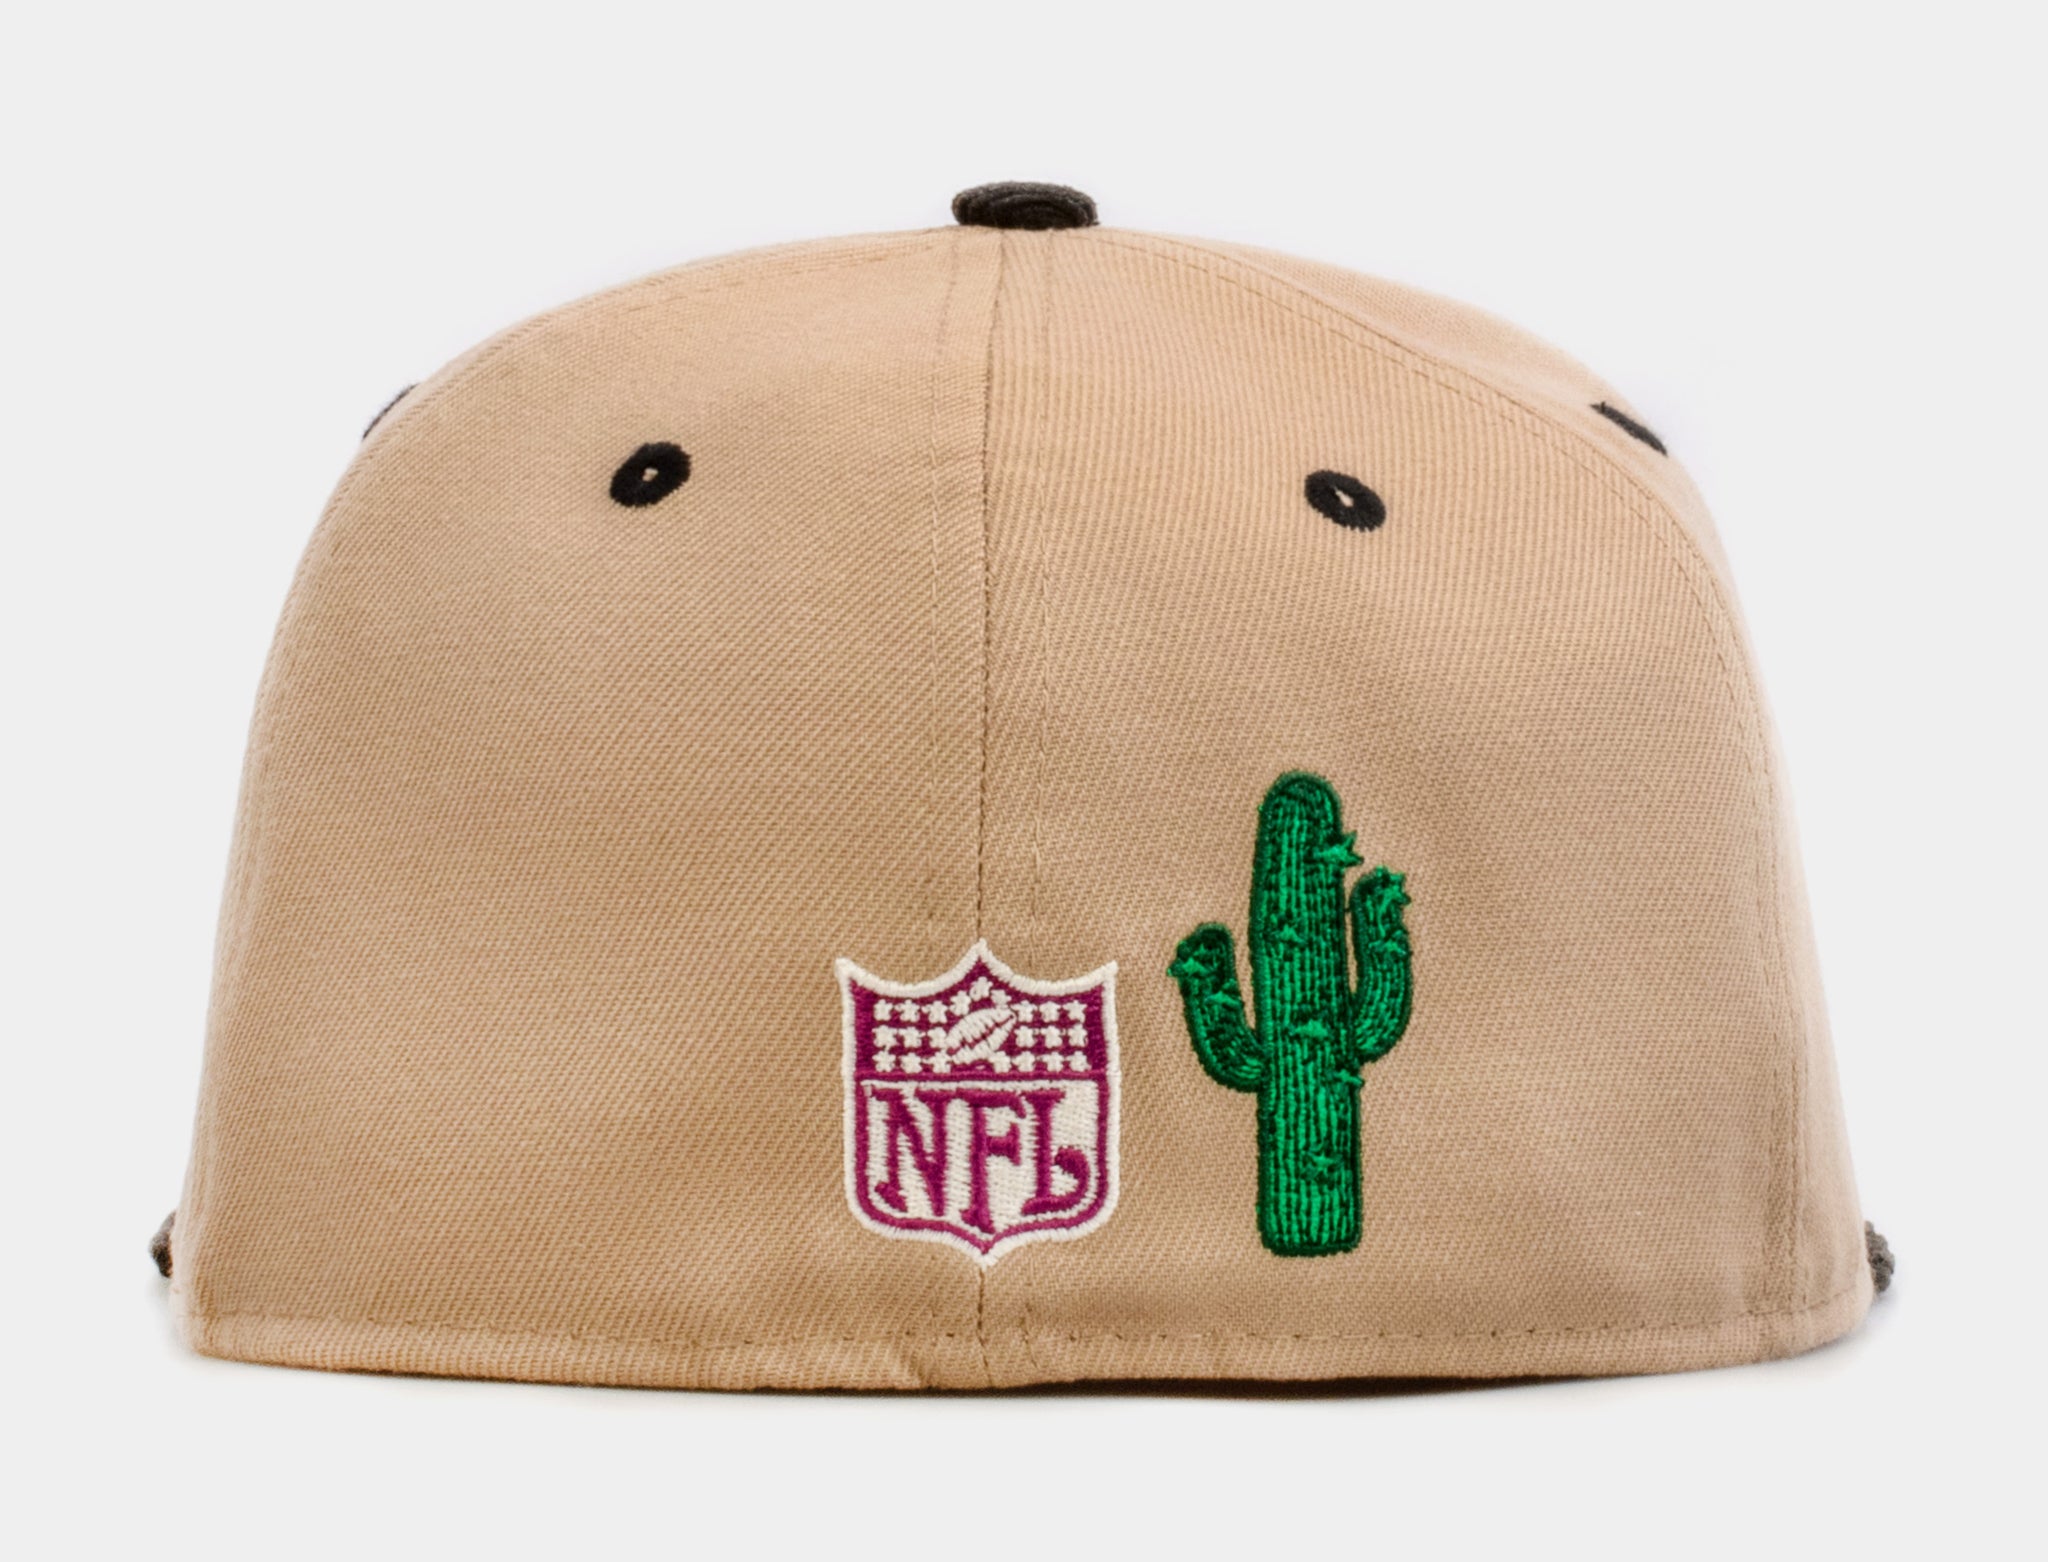 Houston Oilers NFL New Era 9FIFTY Throwback Snapback Hat